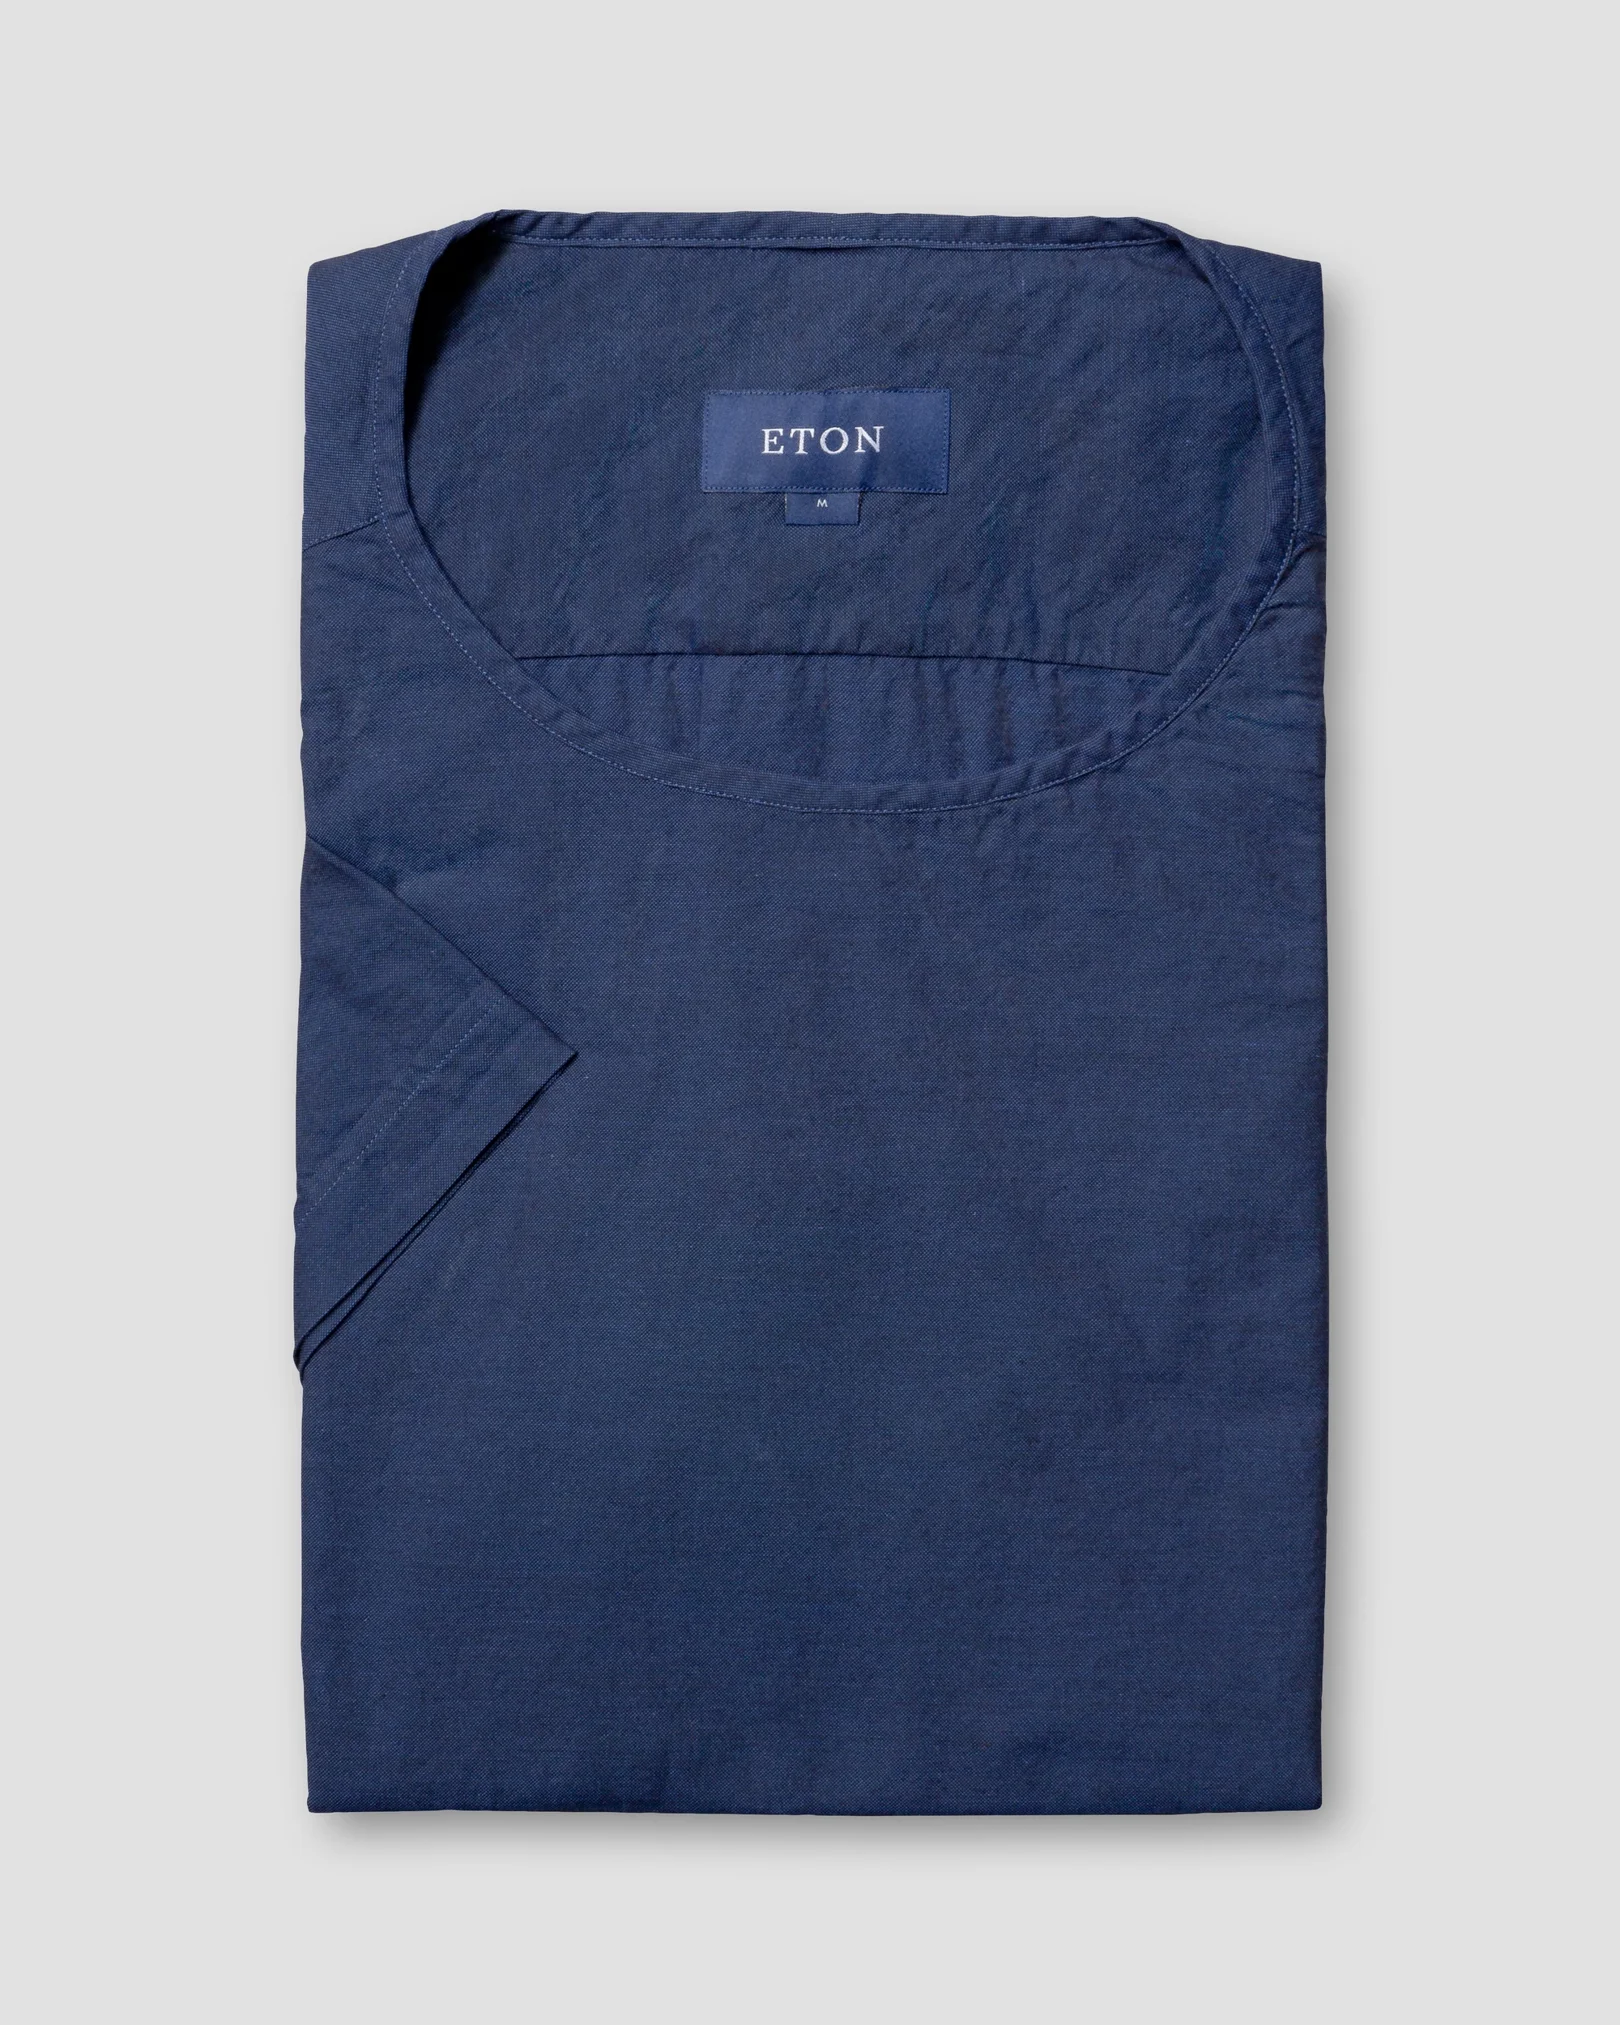 Eton - navy t shirt in woven twill